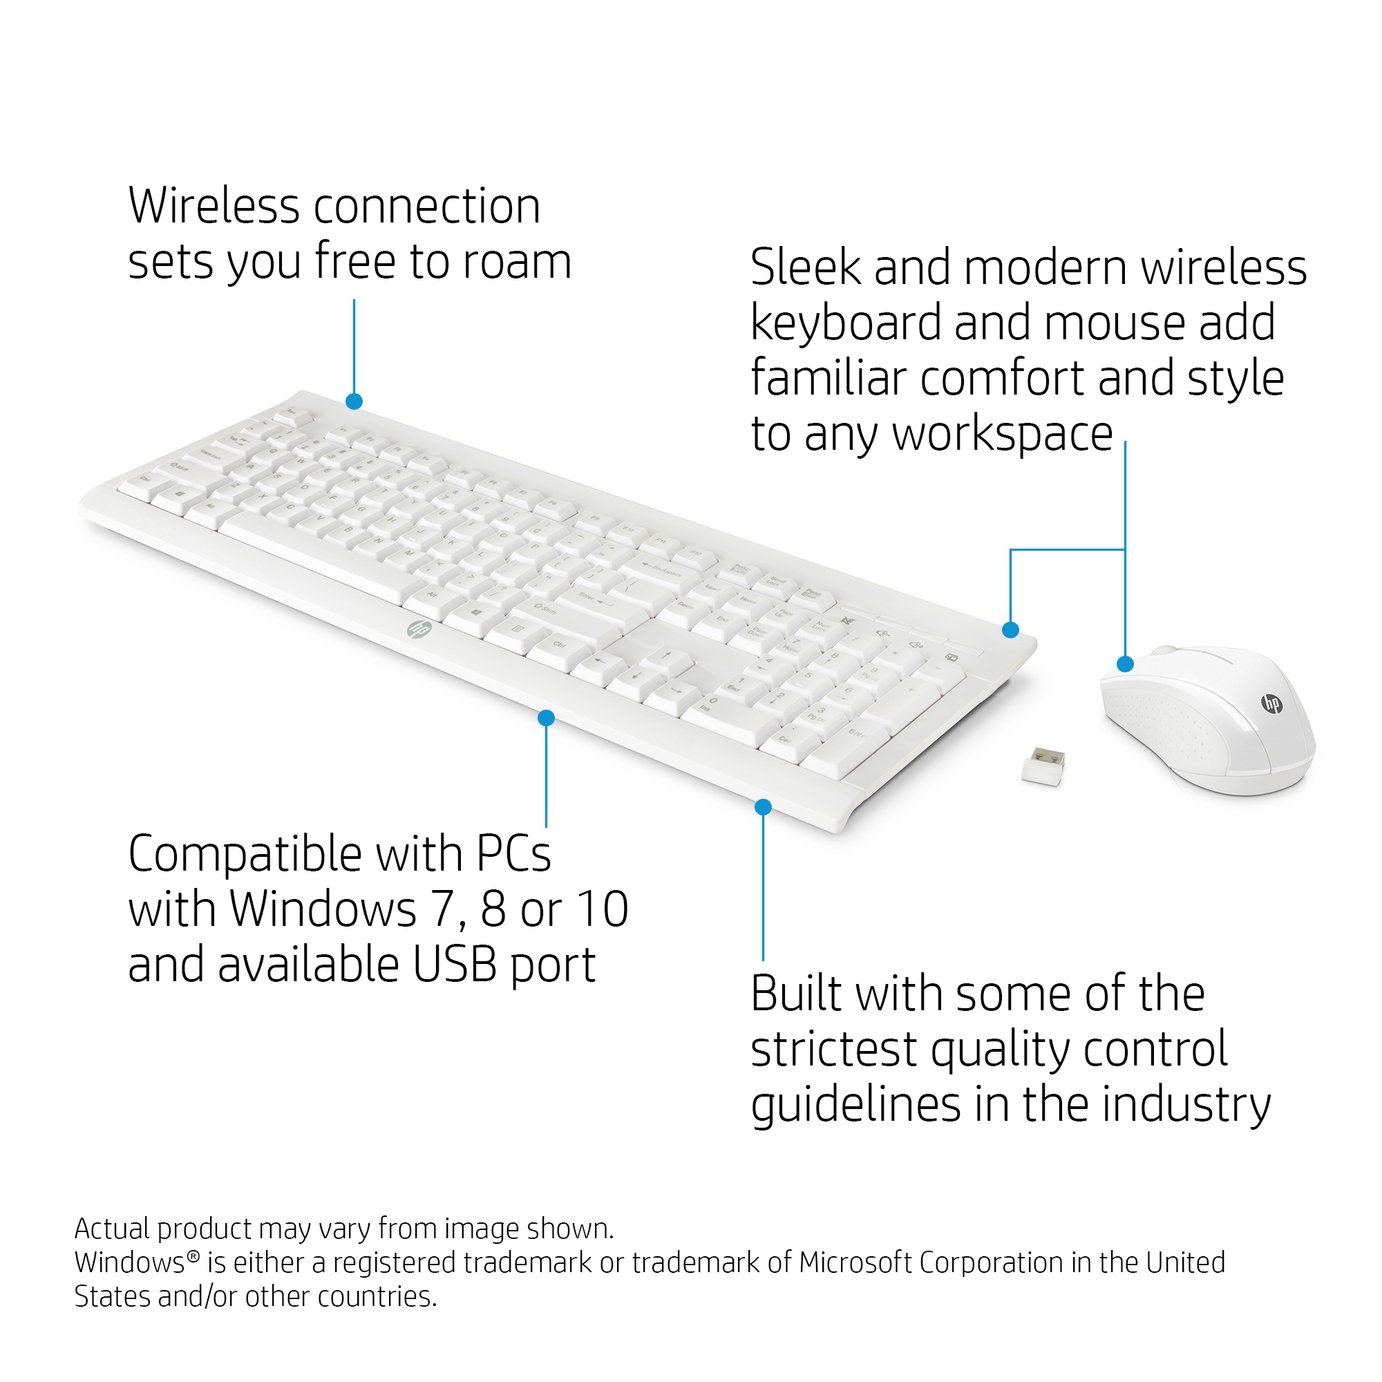 HP C2710 Combo Wireless Keyboard Review